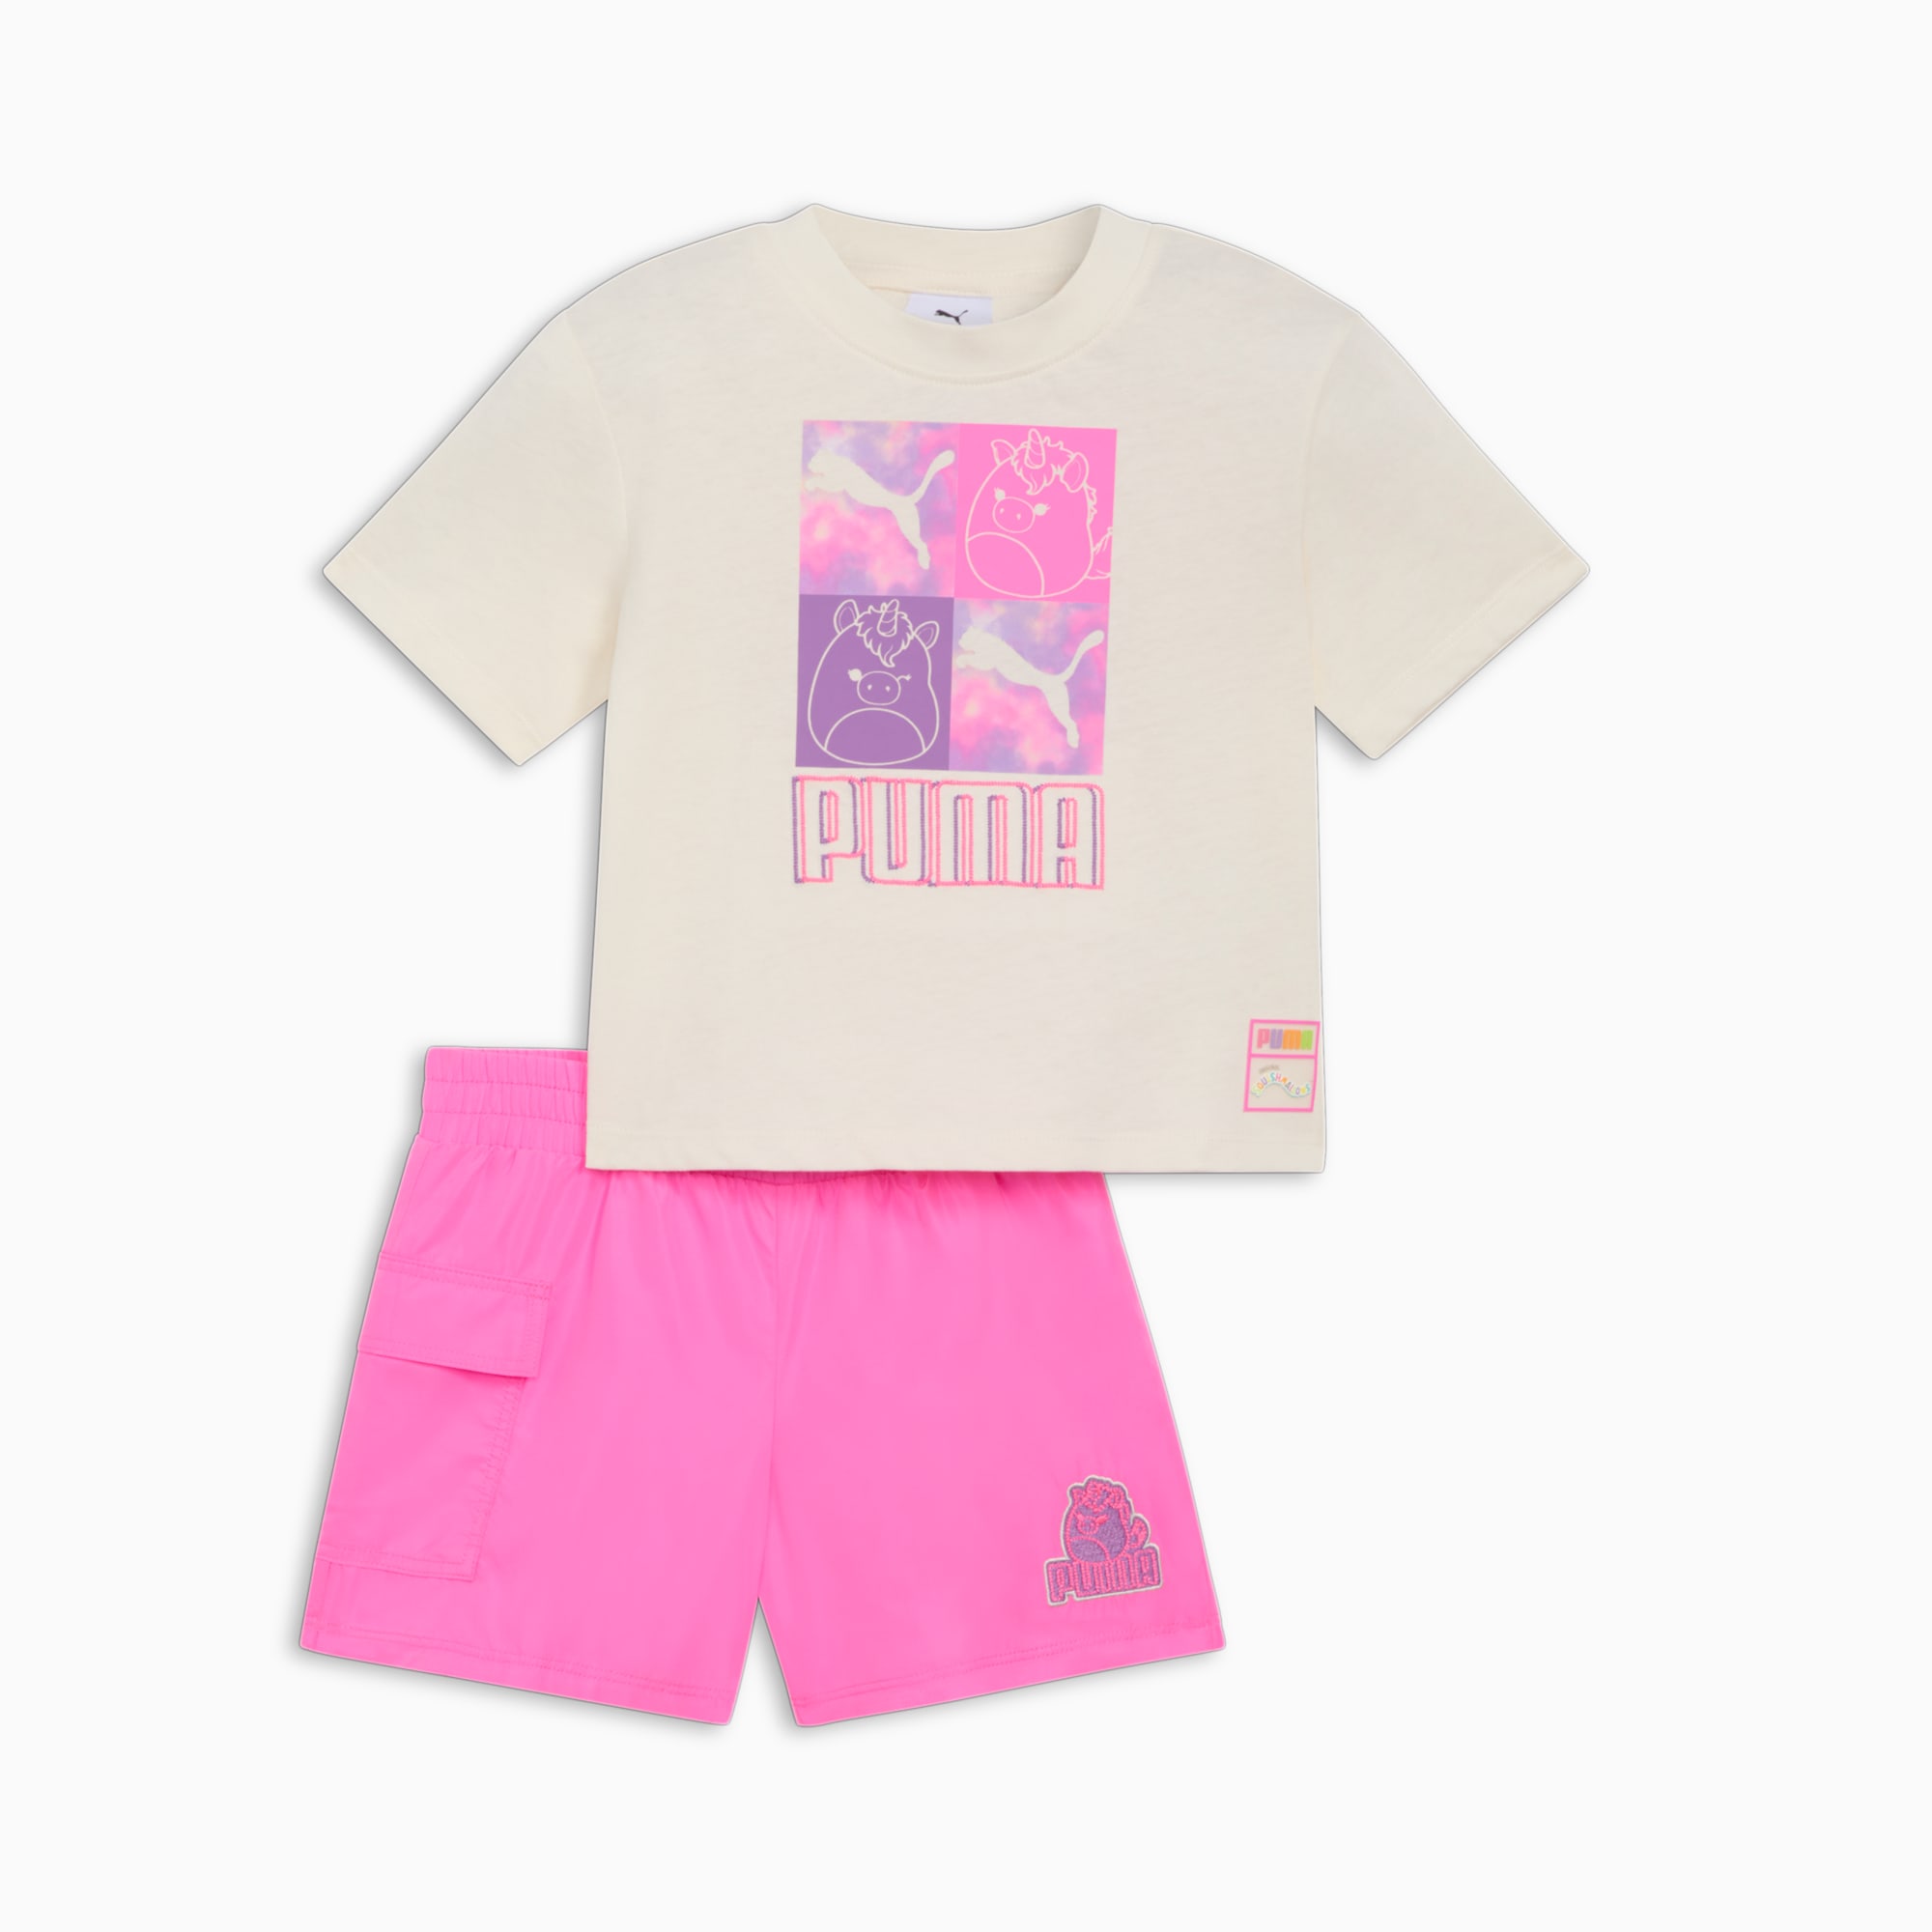 PUMA x SQUISHMALLOWS 2-Piece Toddlers' Lola T-Shirt and Shorts Set PUMA